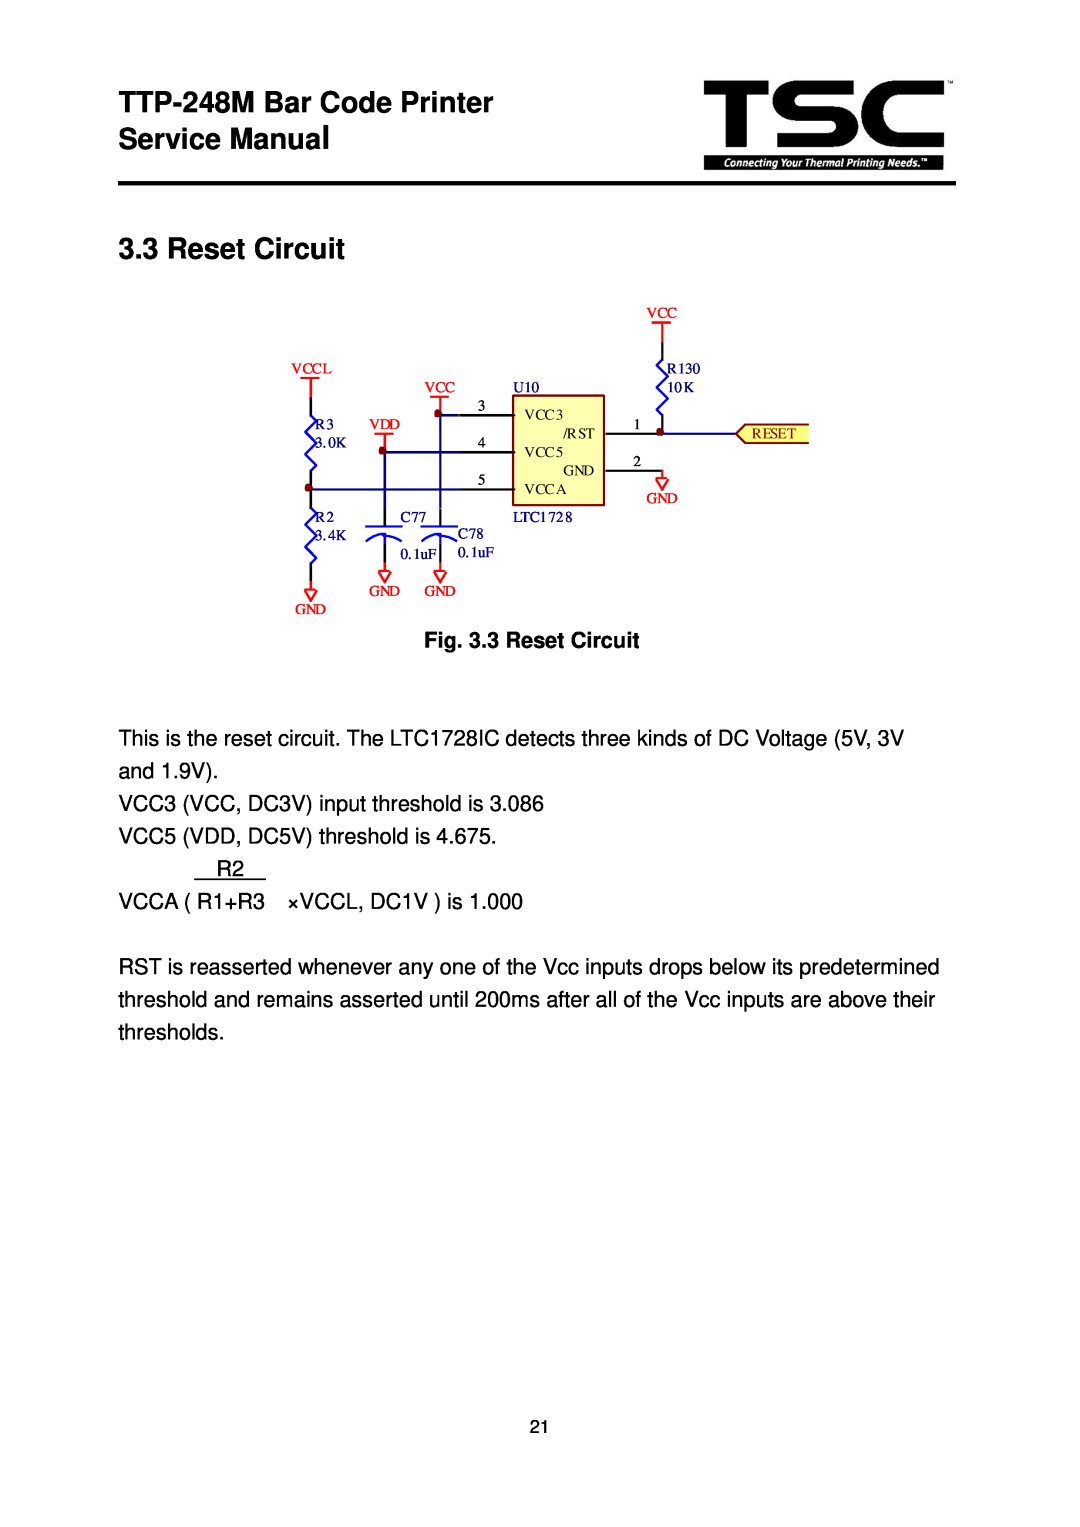 The Speaker Company TTP 248M service manual TTP-248M Bar Code Printer Service Manual 3.3 Reset Circuit 